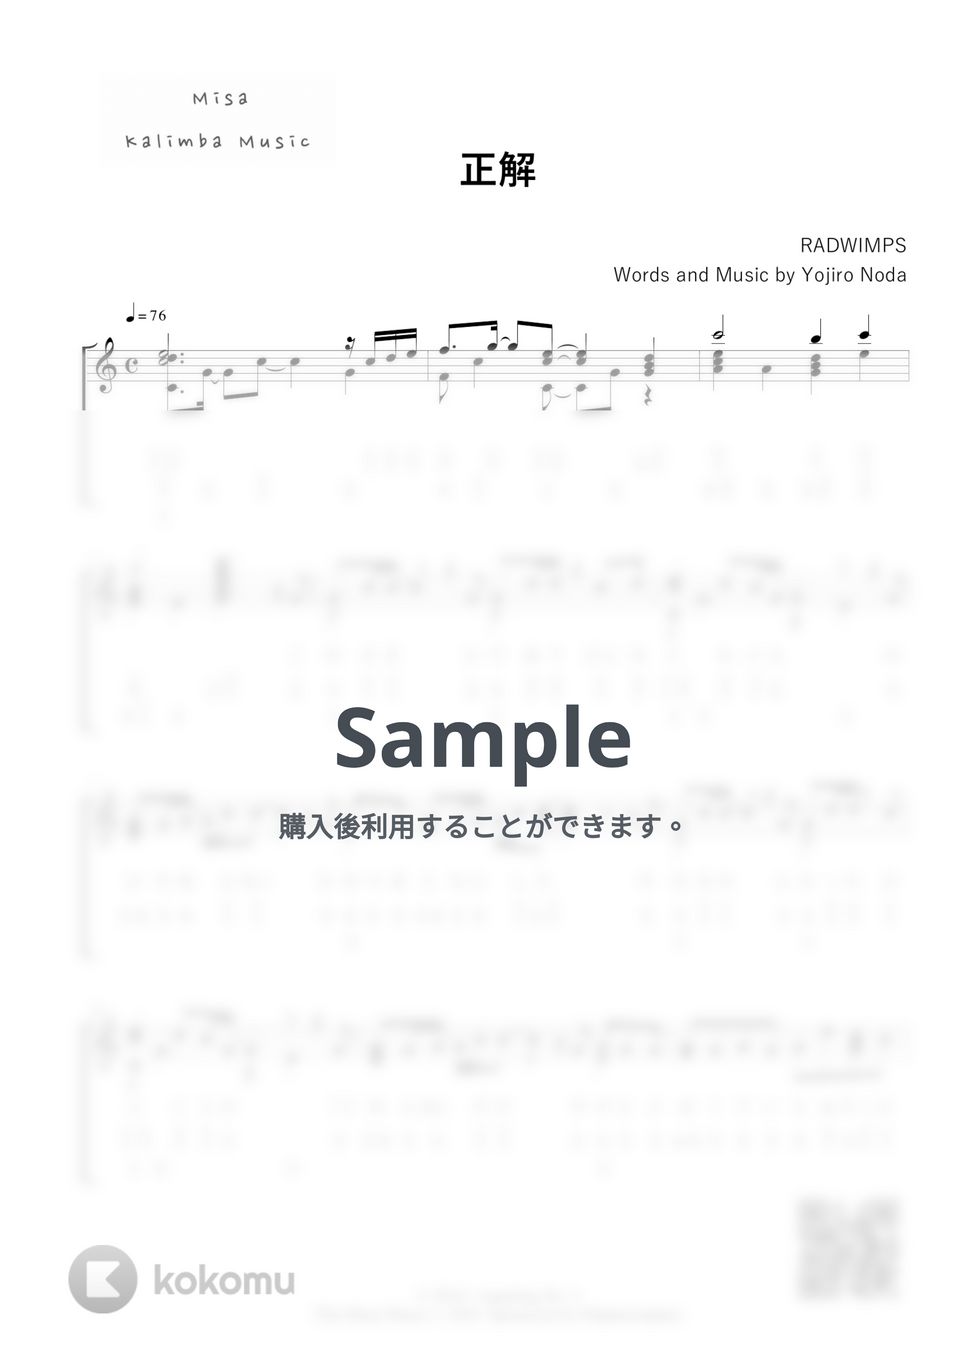 RADWIMPS - 正解 / 17音カリンバ / 数字音名表記 (歌詞付き/ 模範演奏付き) by Misa / Kalimba Music